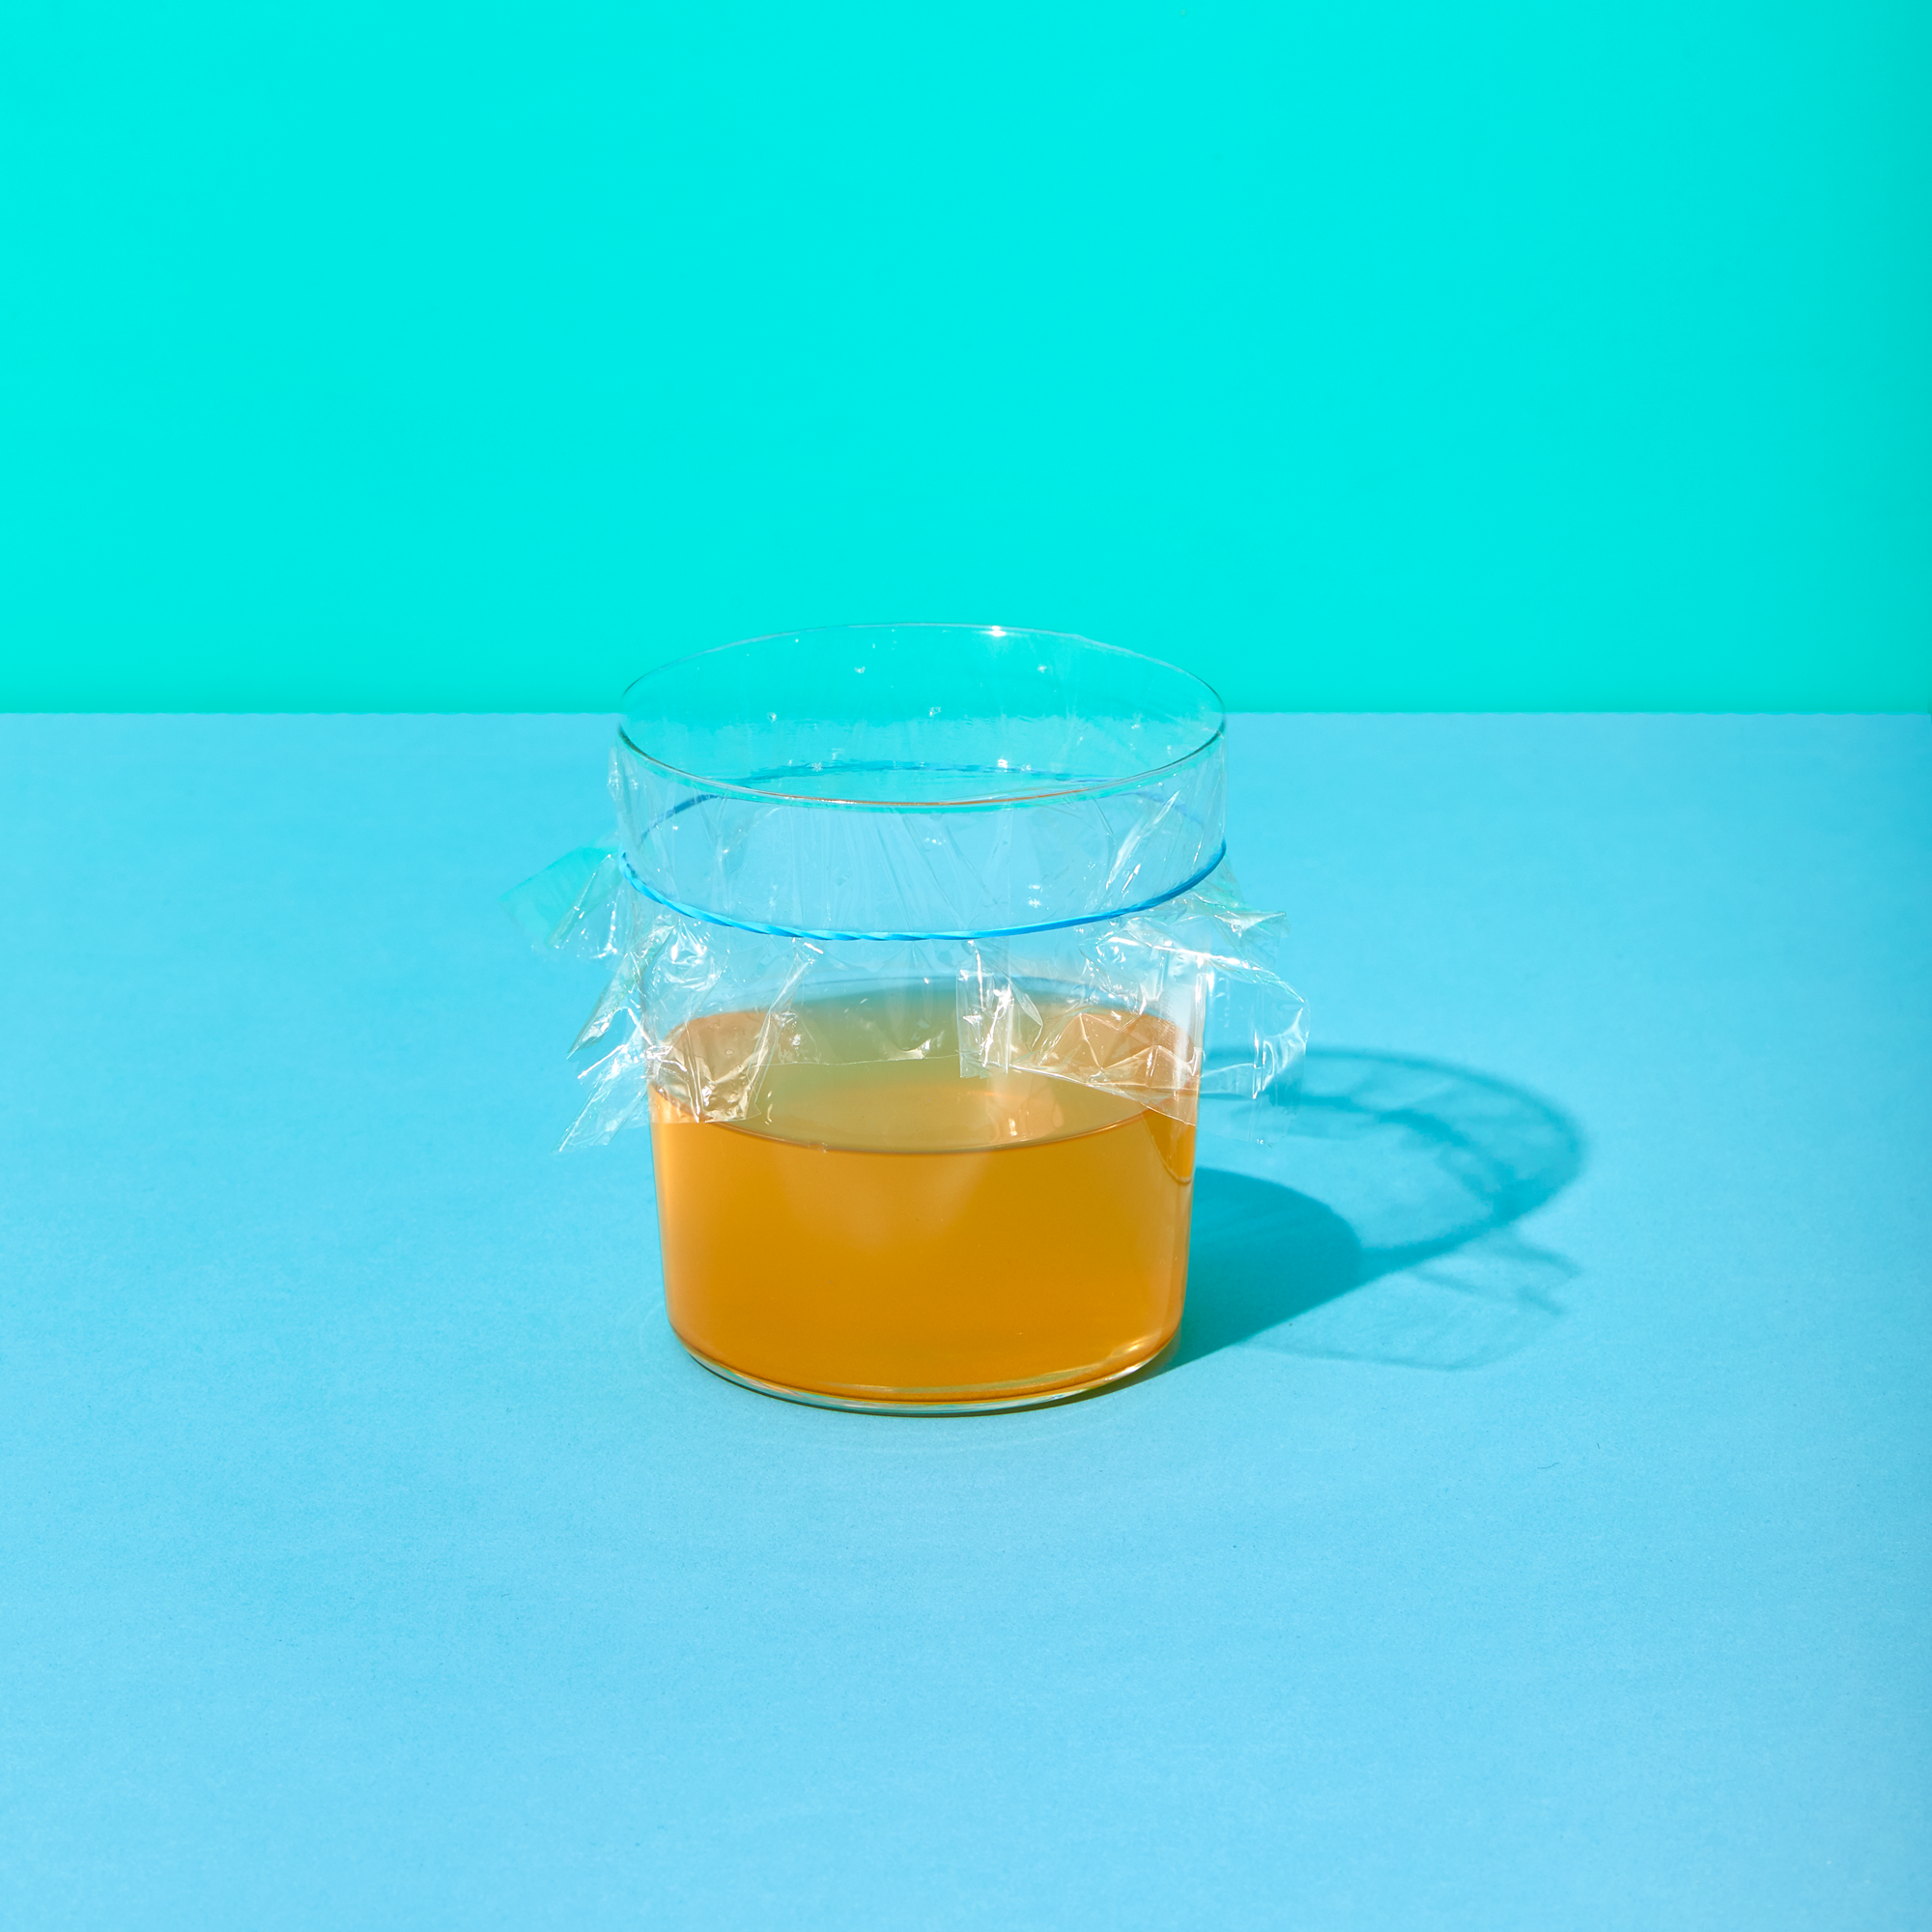 How to Make an Apple Cider Vinegar Fruit Fly Trap